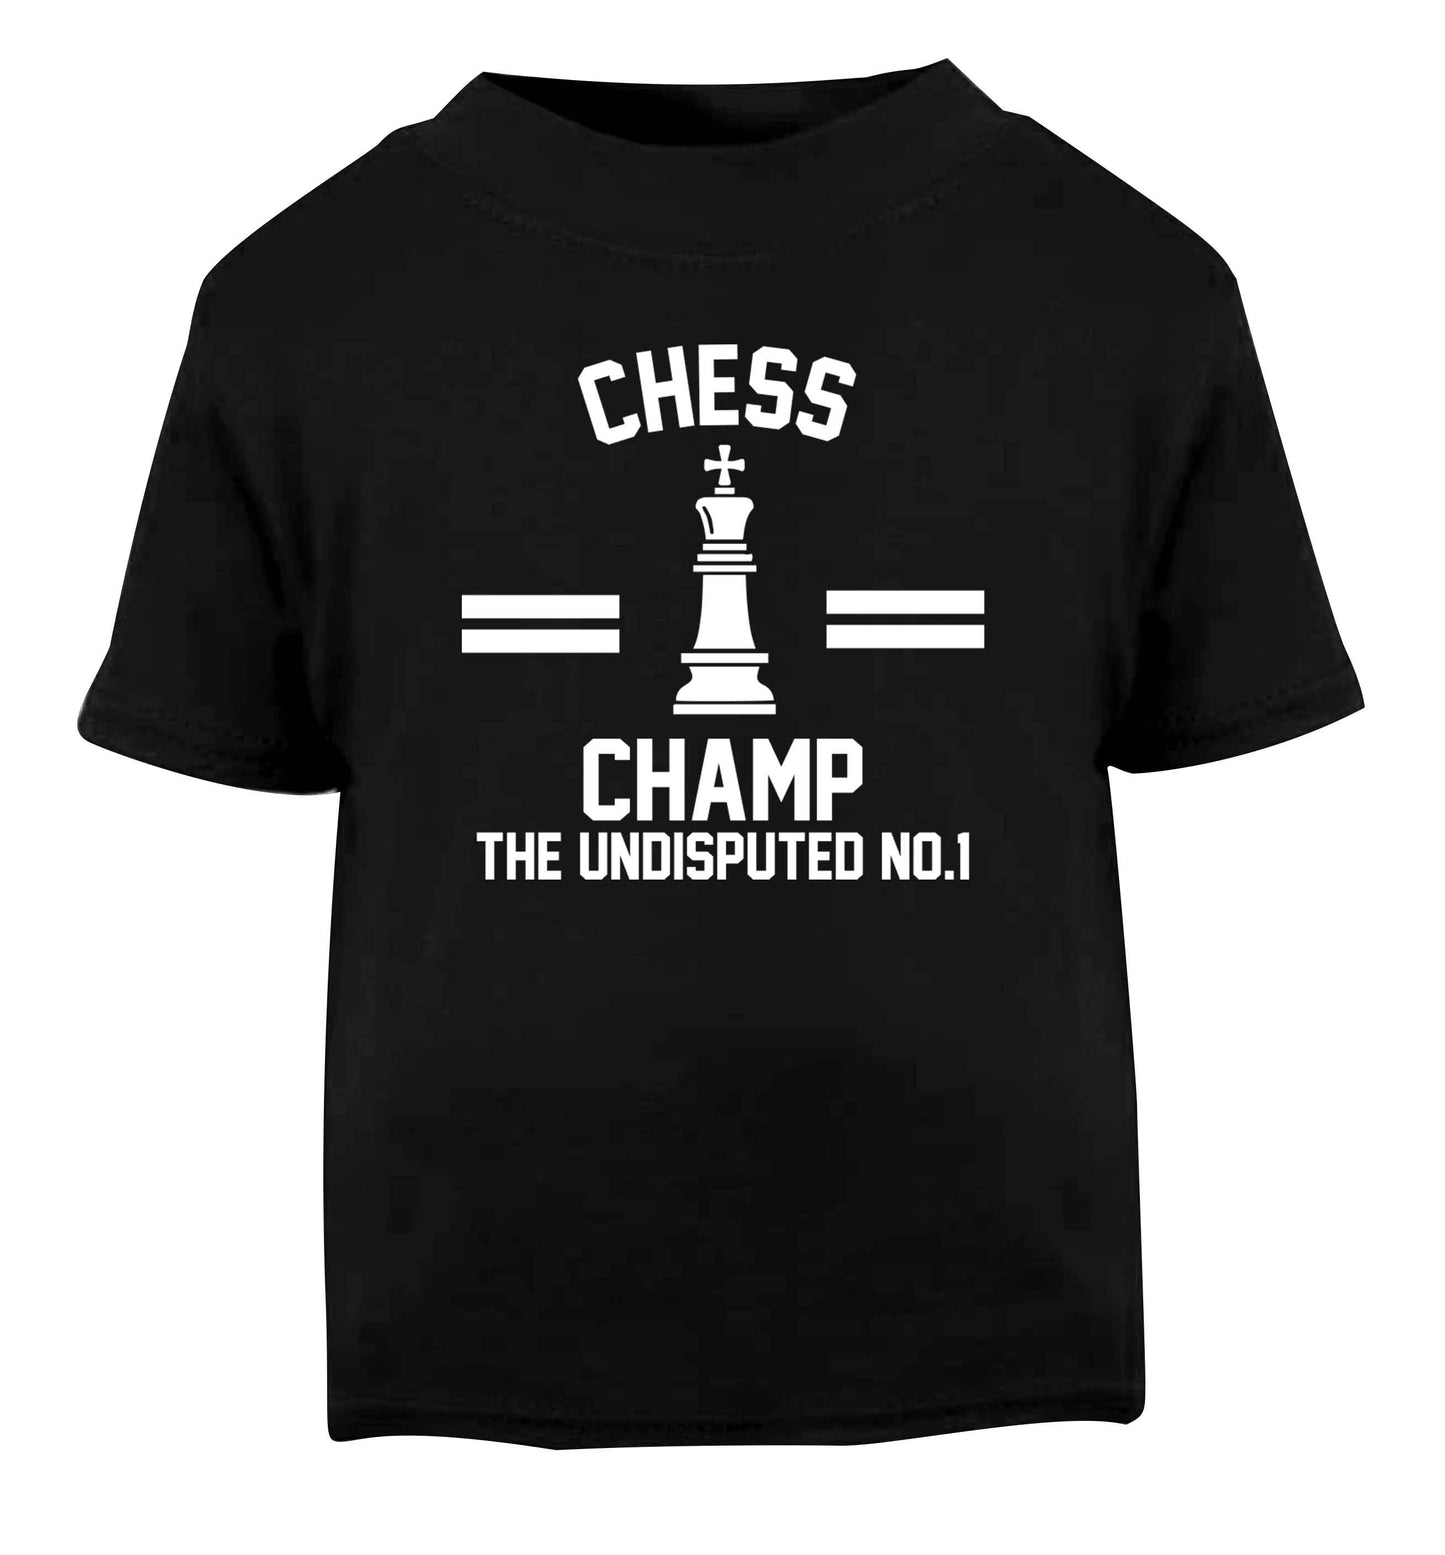 Undisputed chess championship no.1  Black Baby Toddler Tshirt 2 years